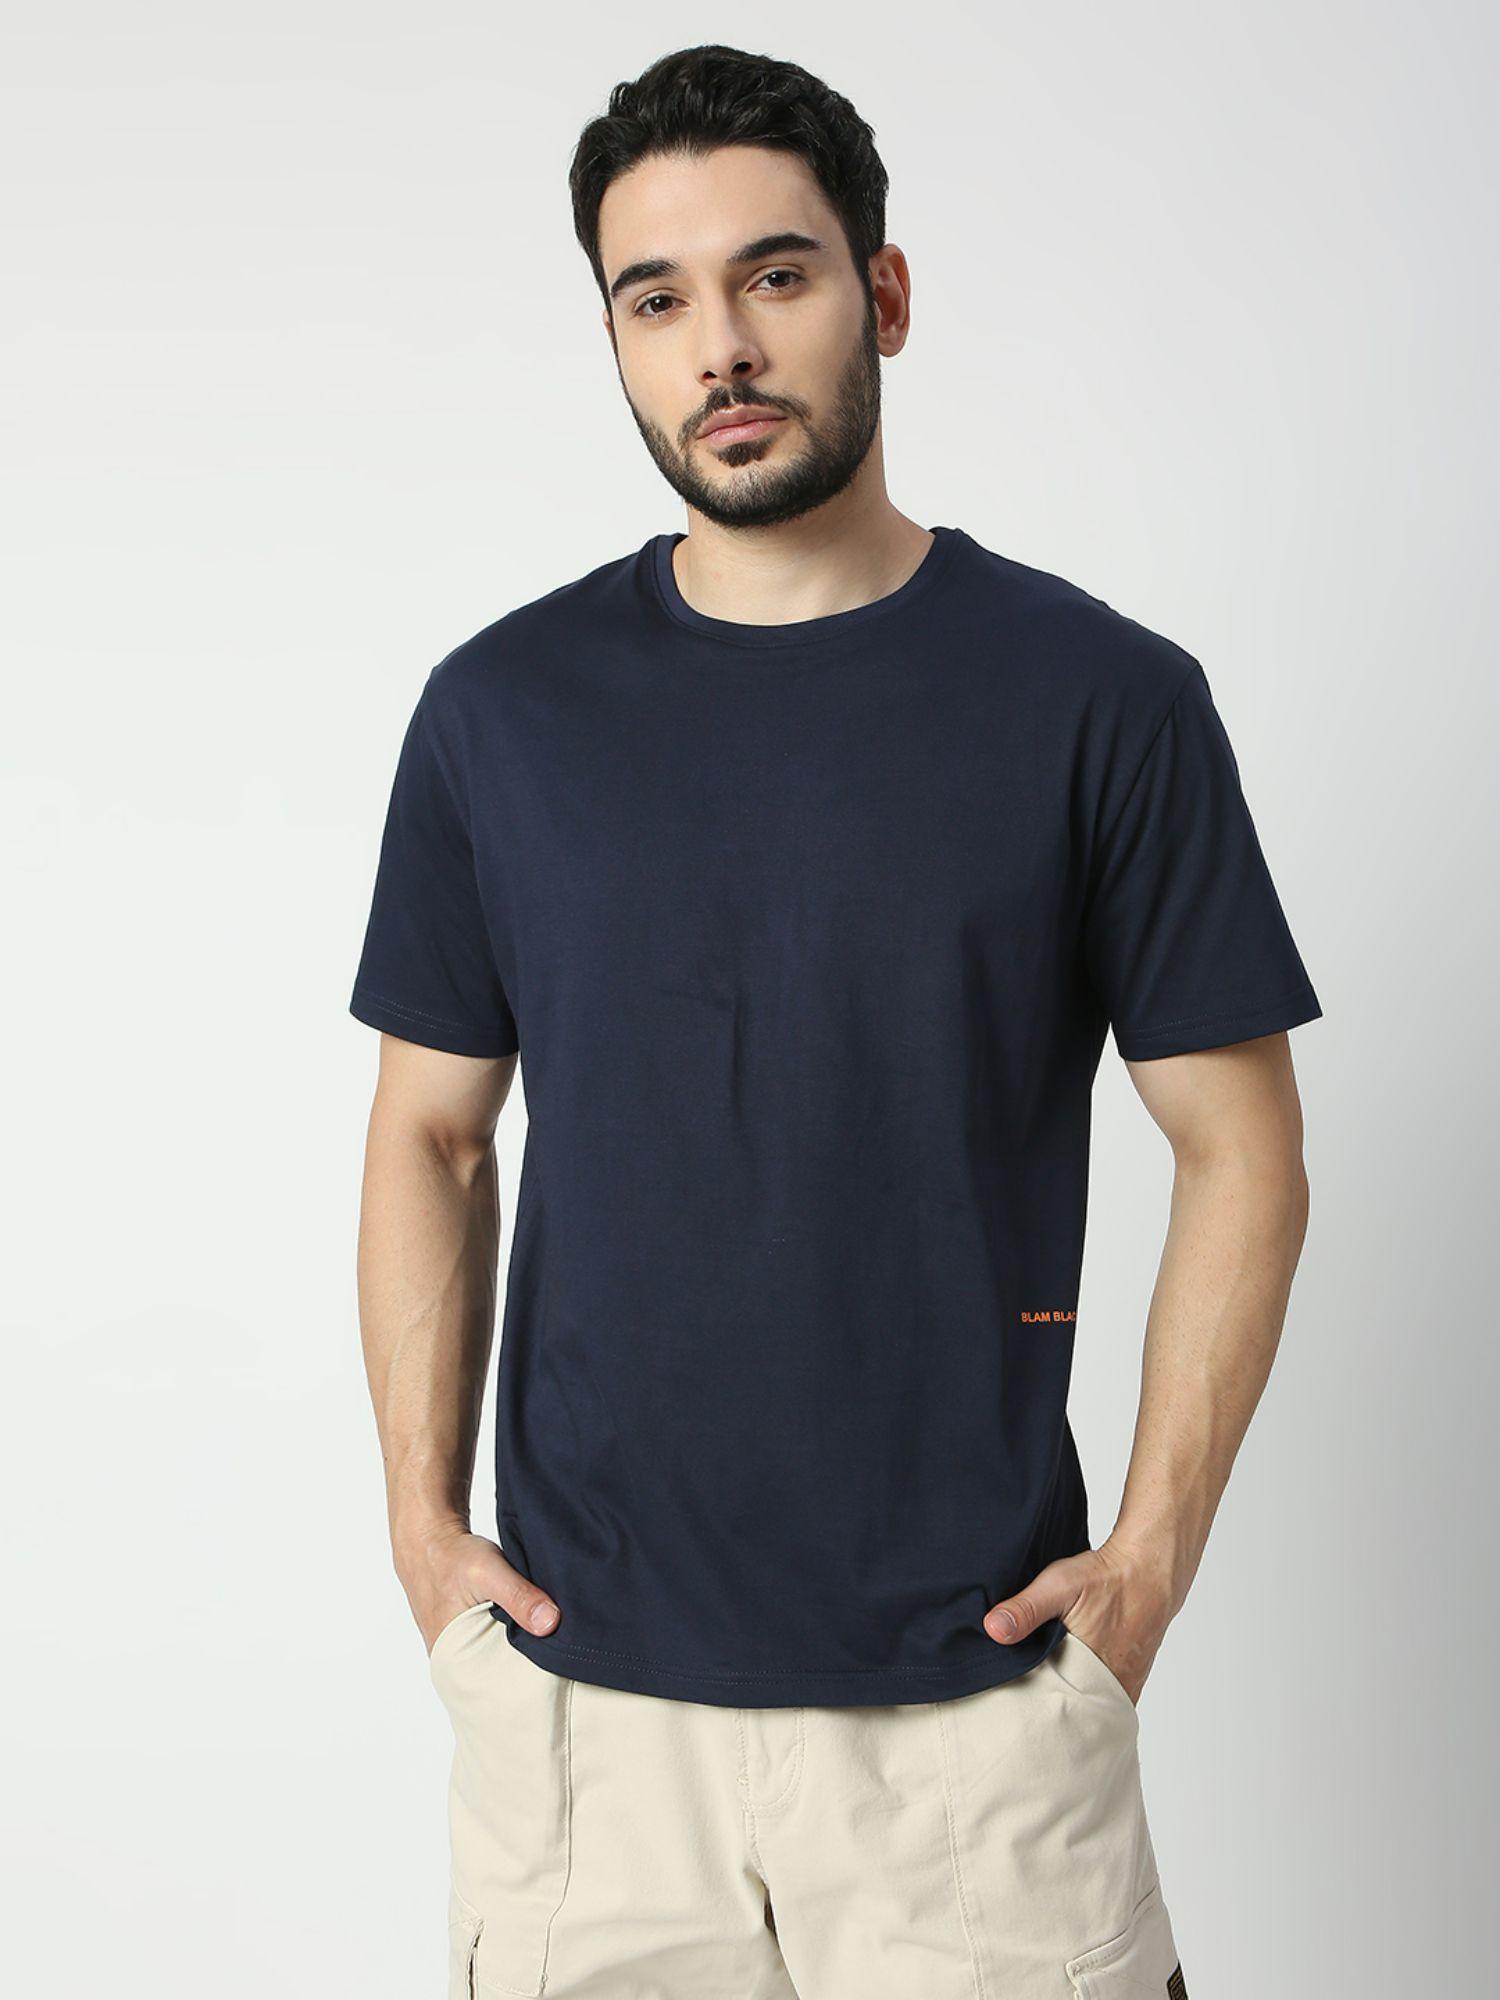 solid navy blue half sleeved t-shirt